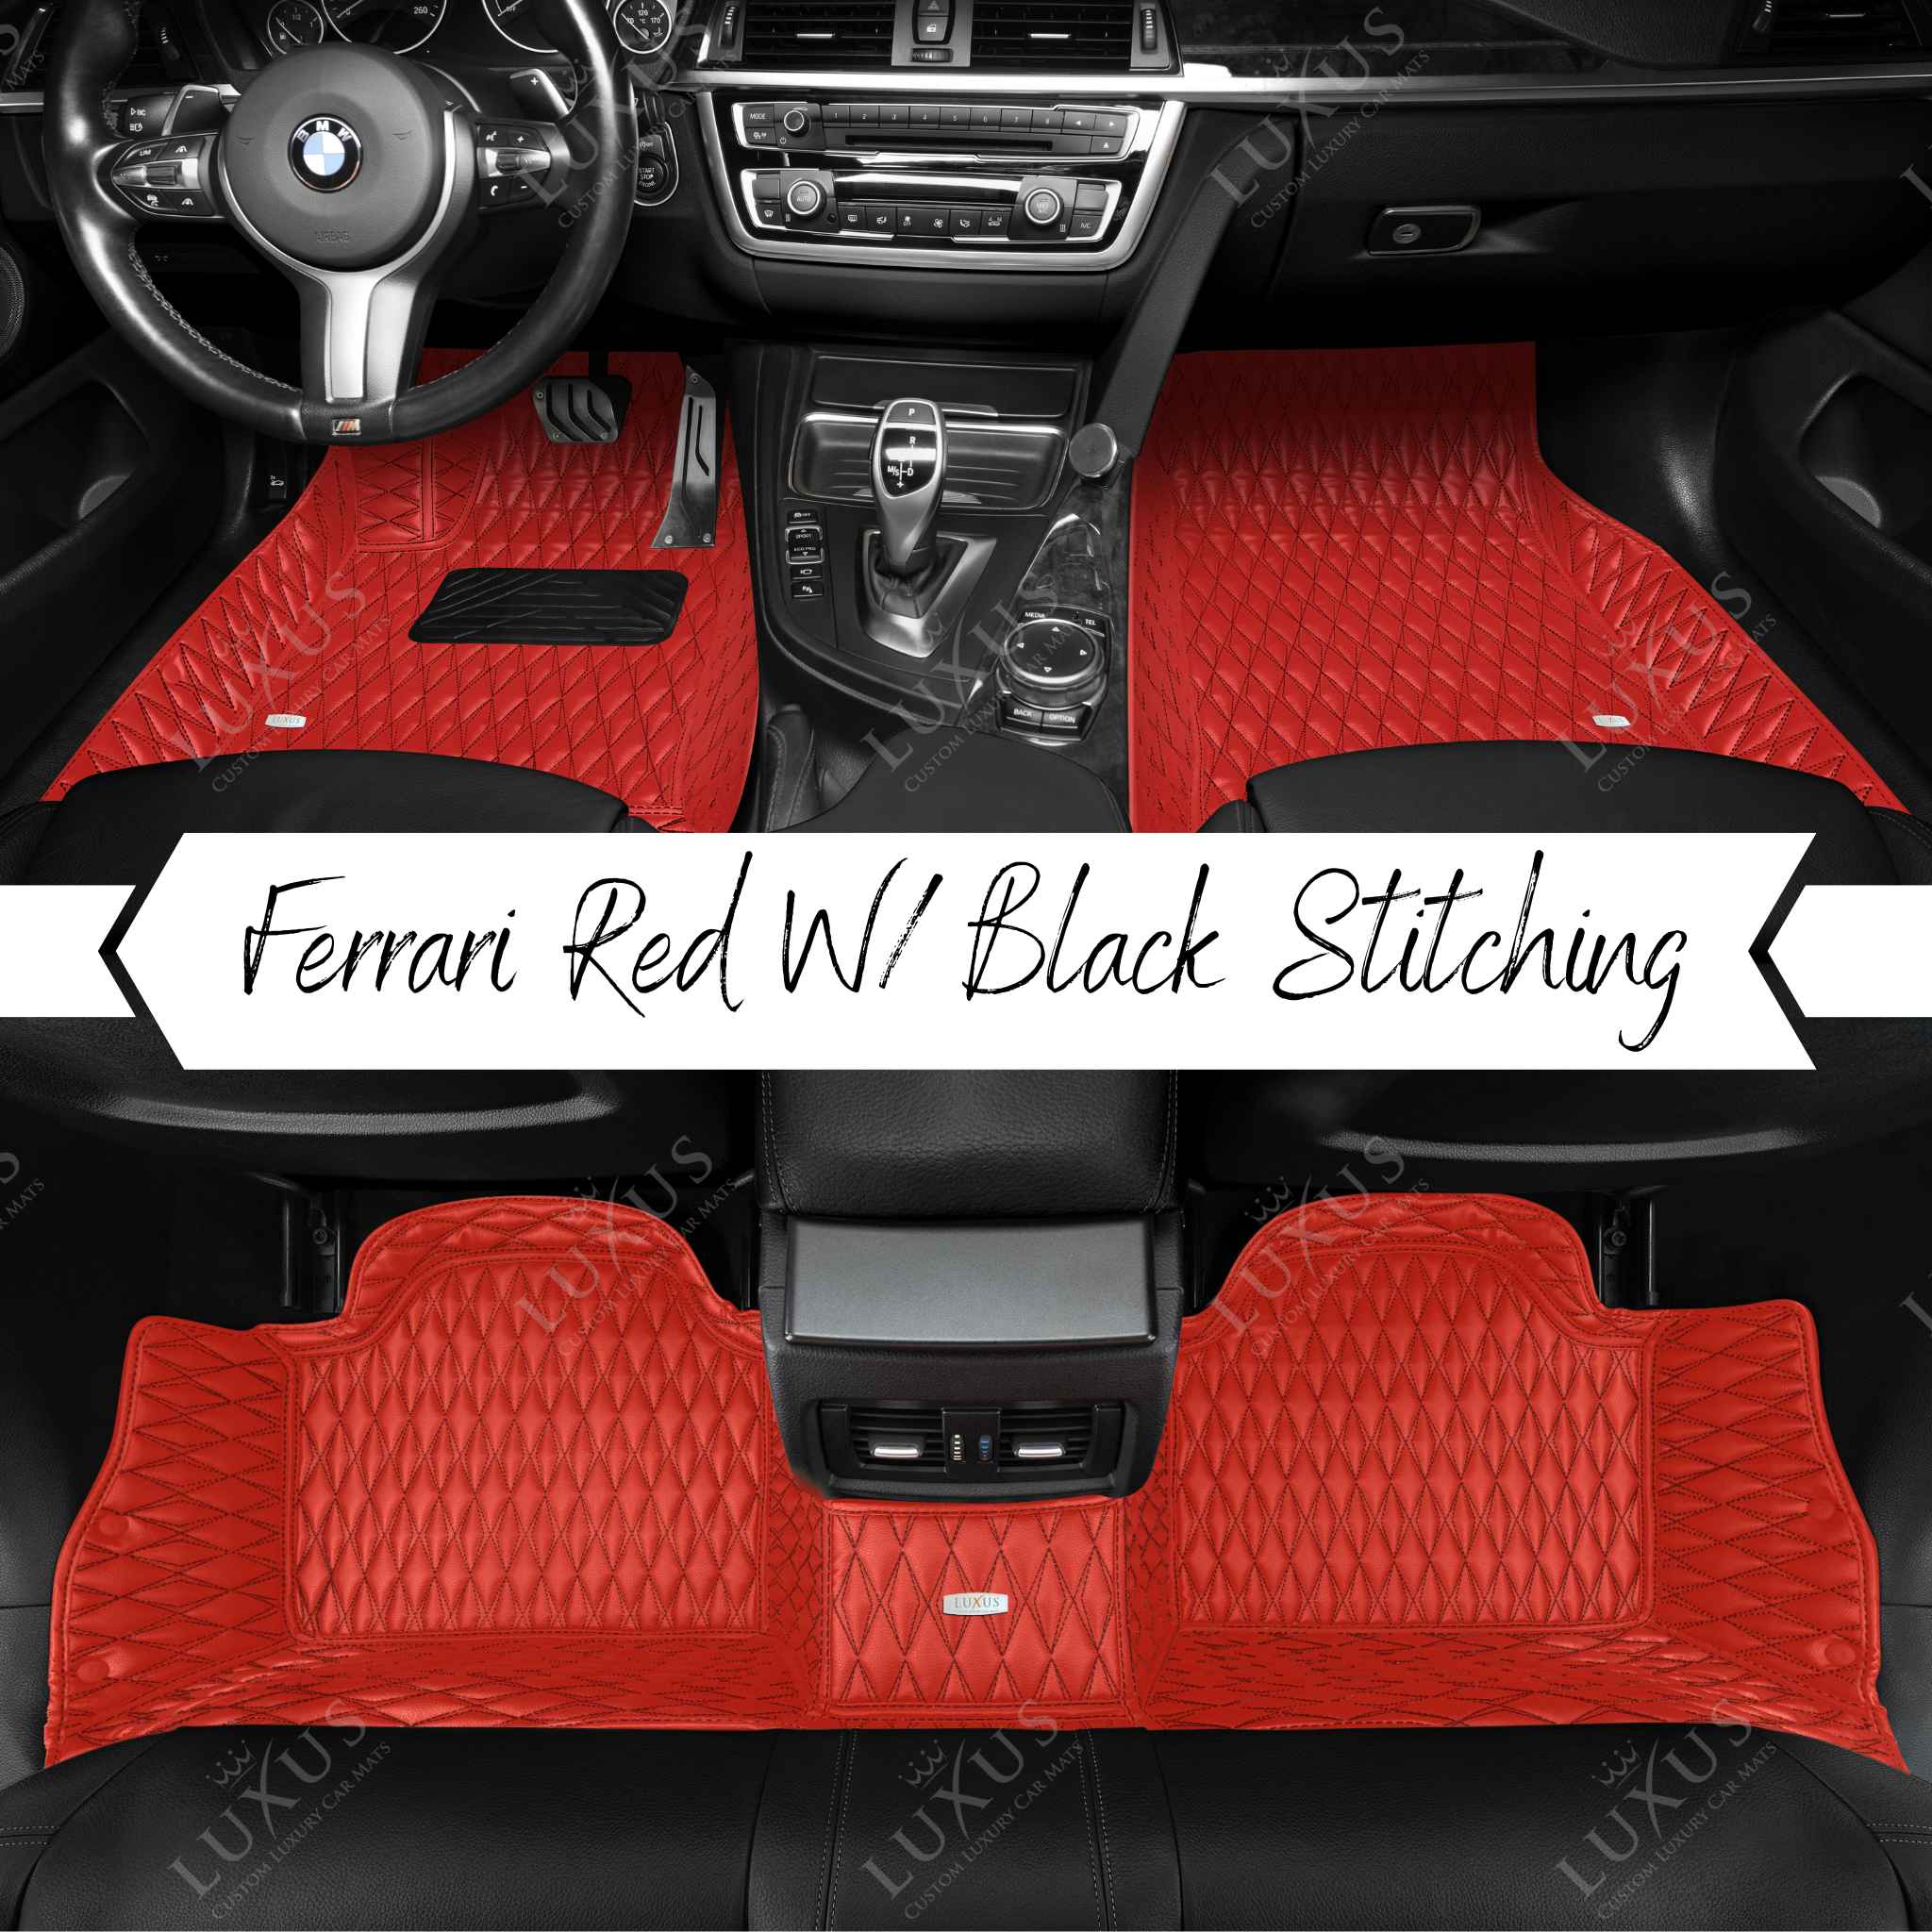 Twin-Diamond Ferrari Red Black Stitching Luxury Car Mats Set